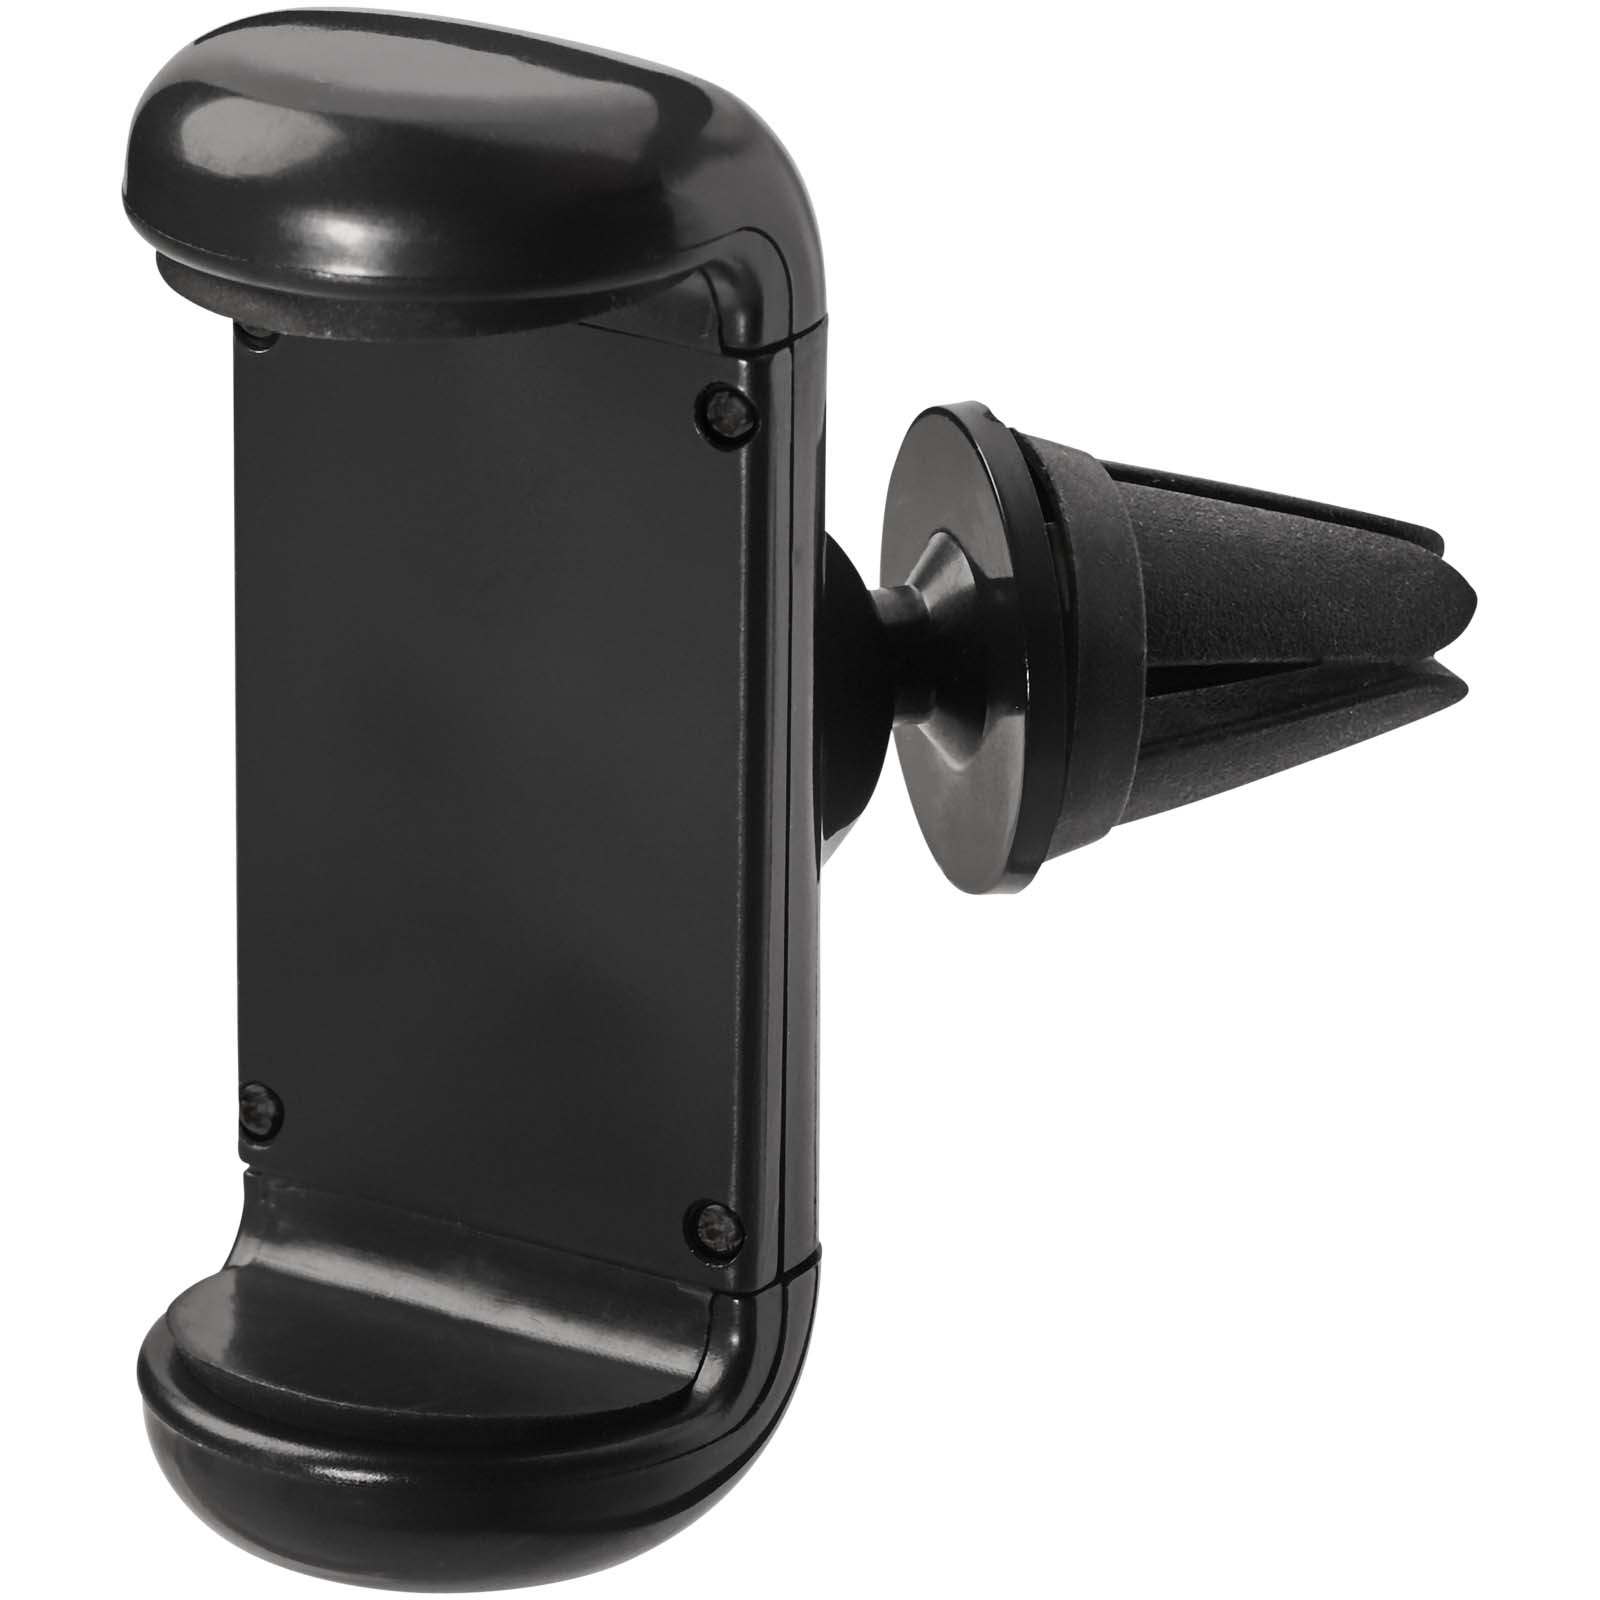 Advertising Telephone & Tablet Accessories - Grip car phone holder - 3